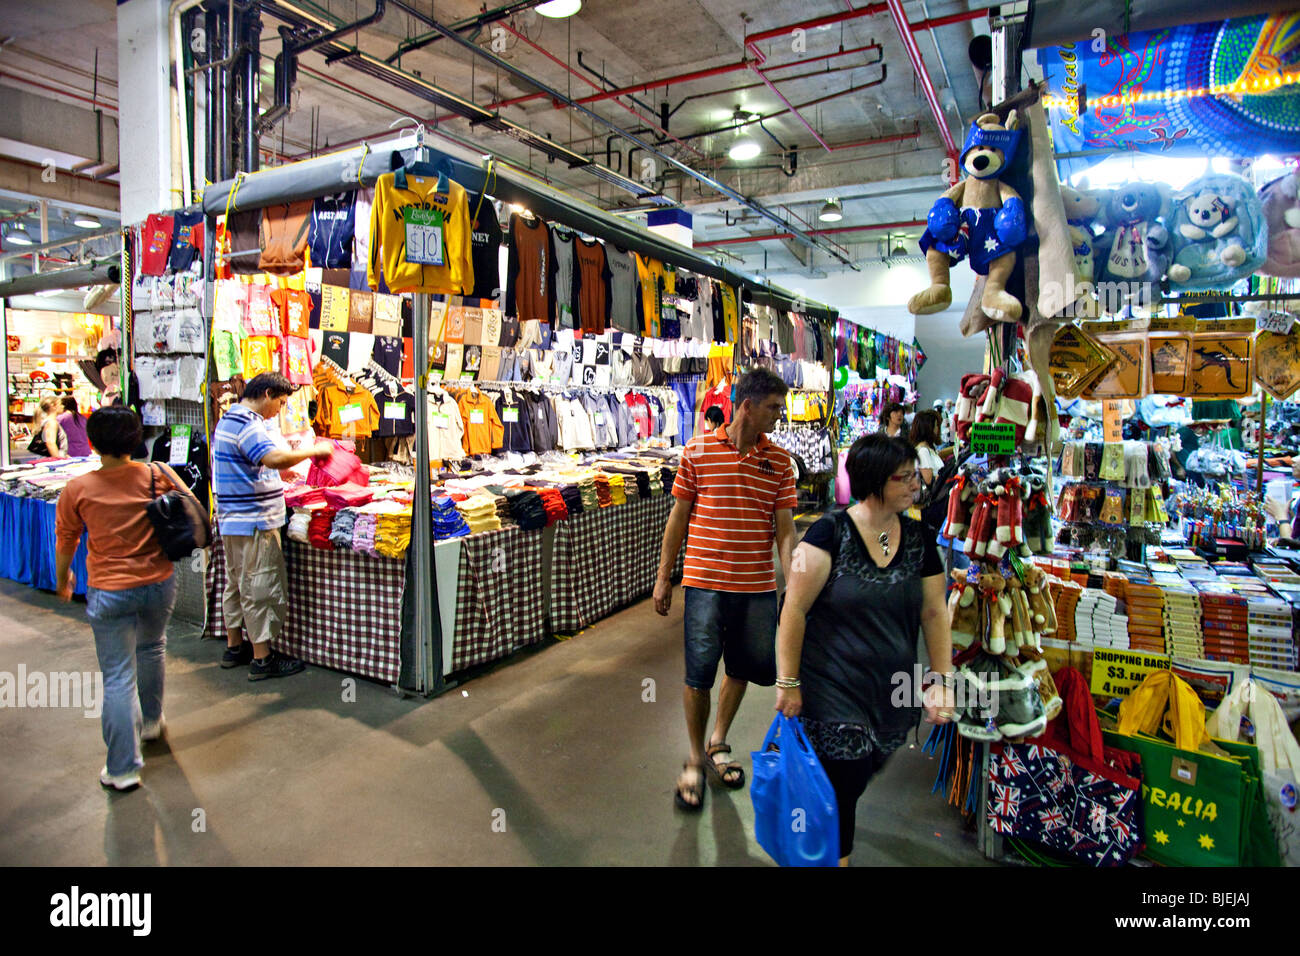 Souvenirs stalls inside Paddy's Markets, Sydney, NSW, Australia Stock Photo